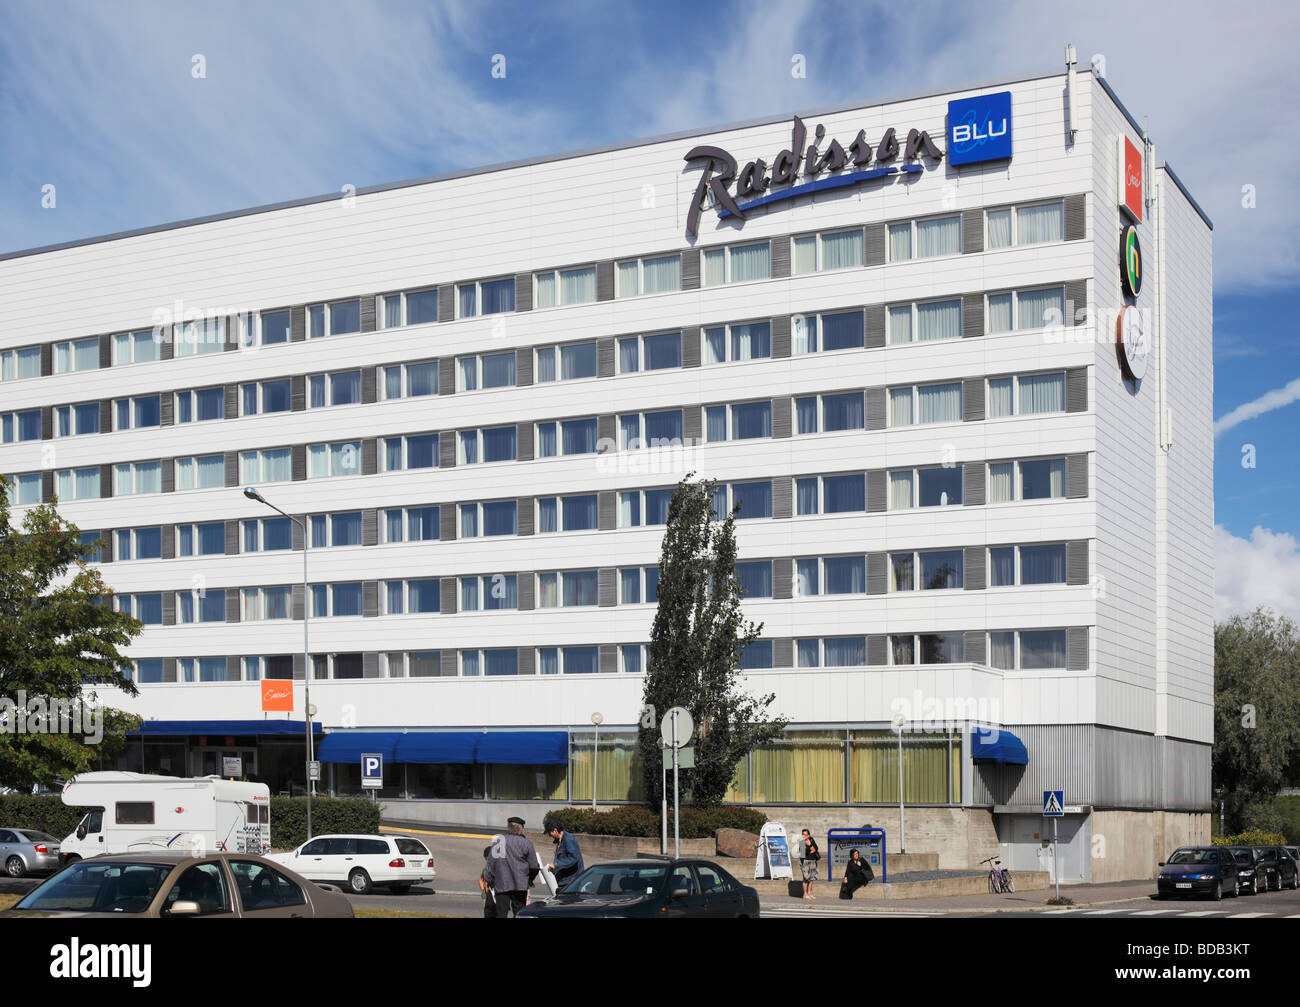 Radisson Blu hotel located in Oulu Finland Stock Photo